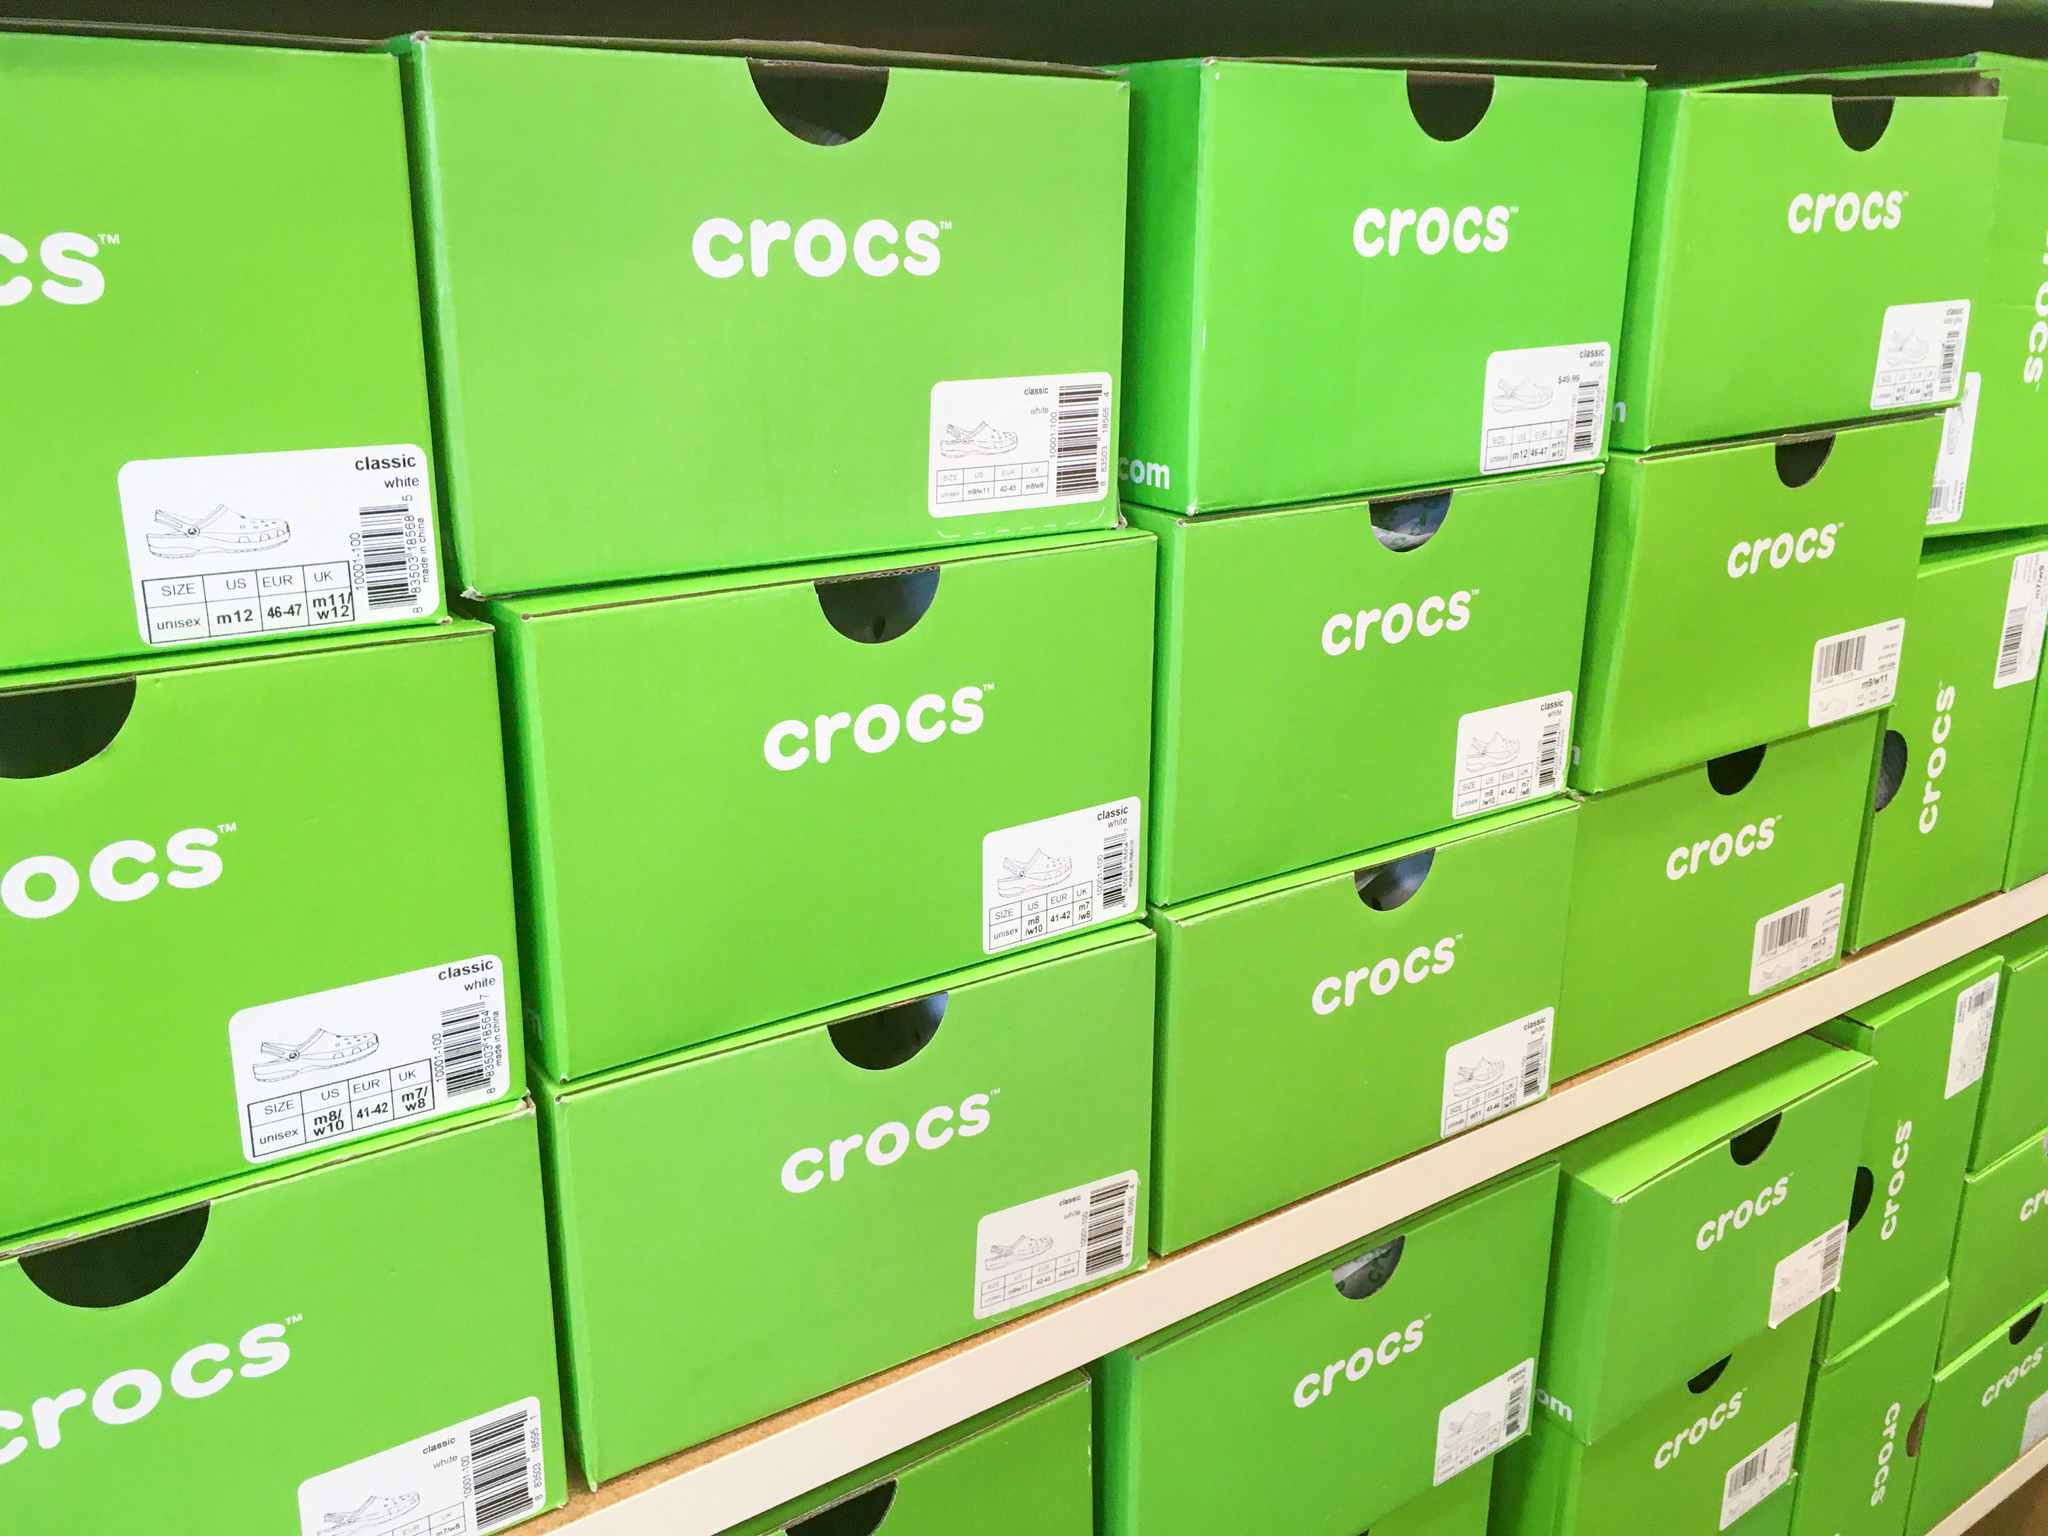 stacks of crocs shoe boxes